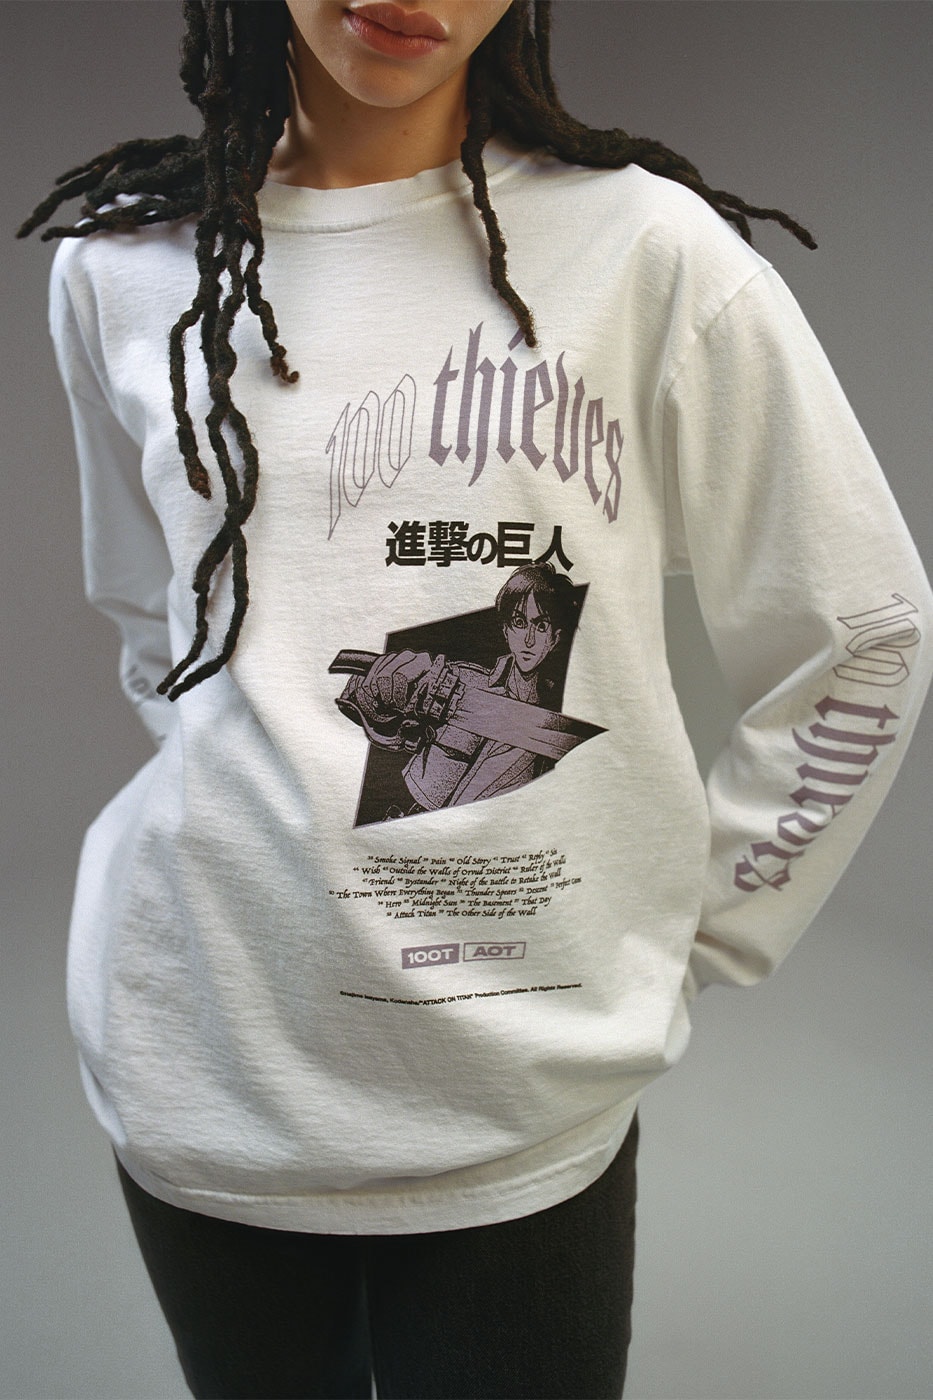 100 Thieves Attack on Titan AoT levi eren mikasa artwork graphics tees t shirts hoodies collared jacket gaming anime manga release info price date